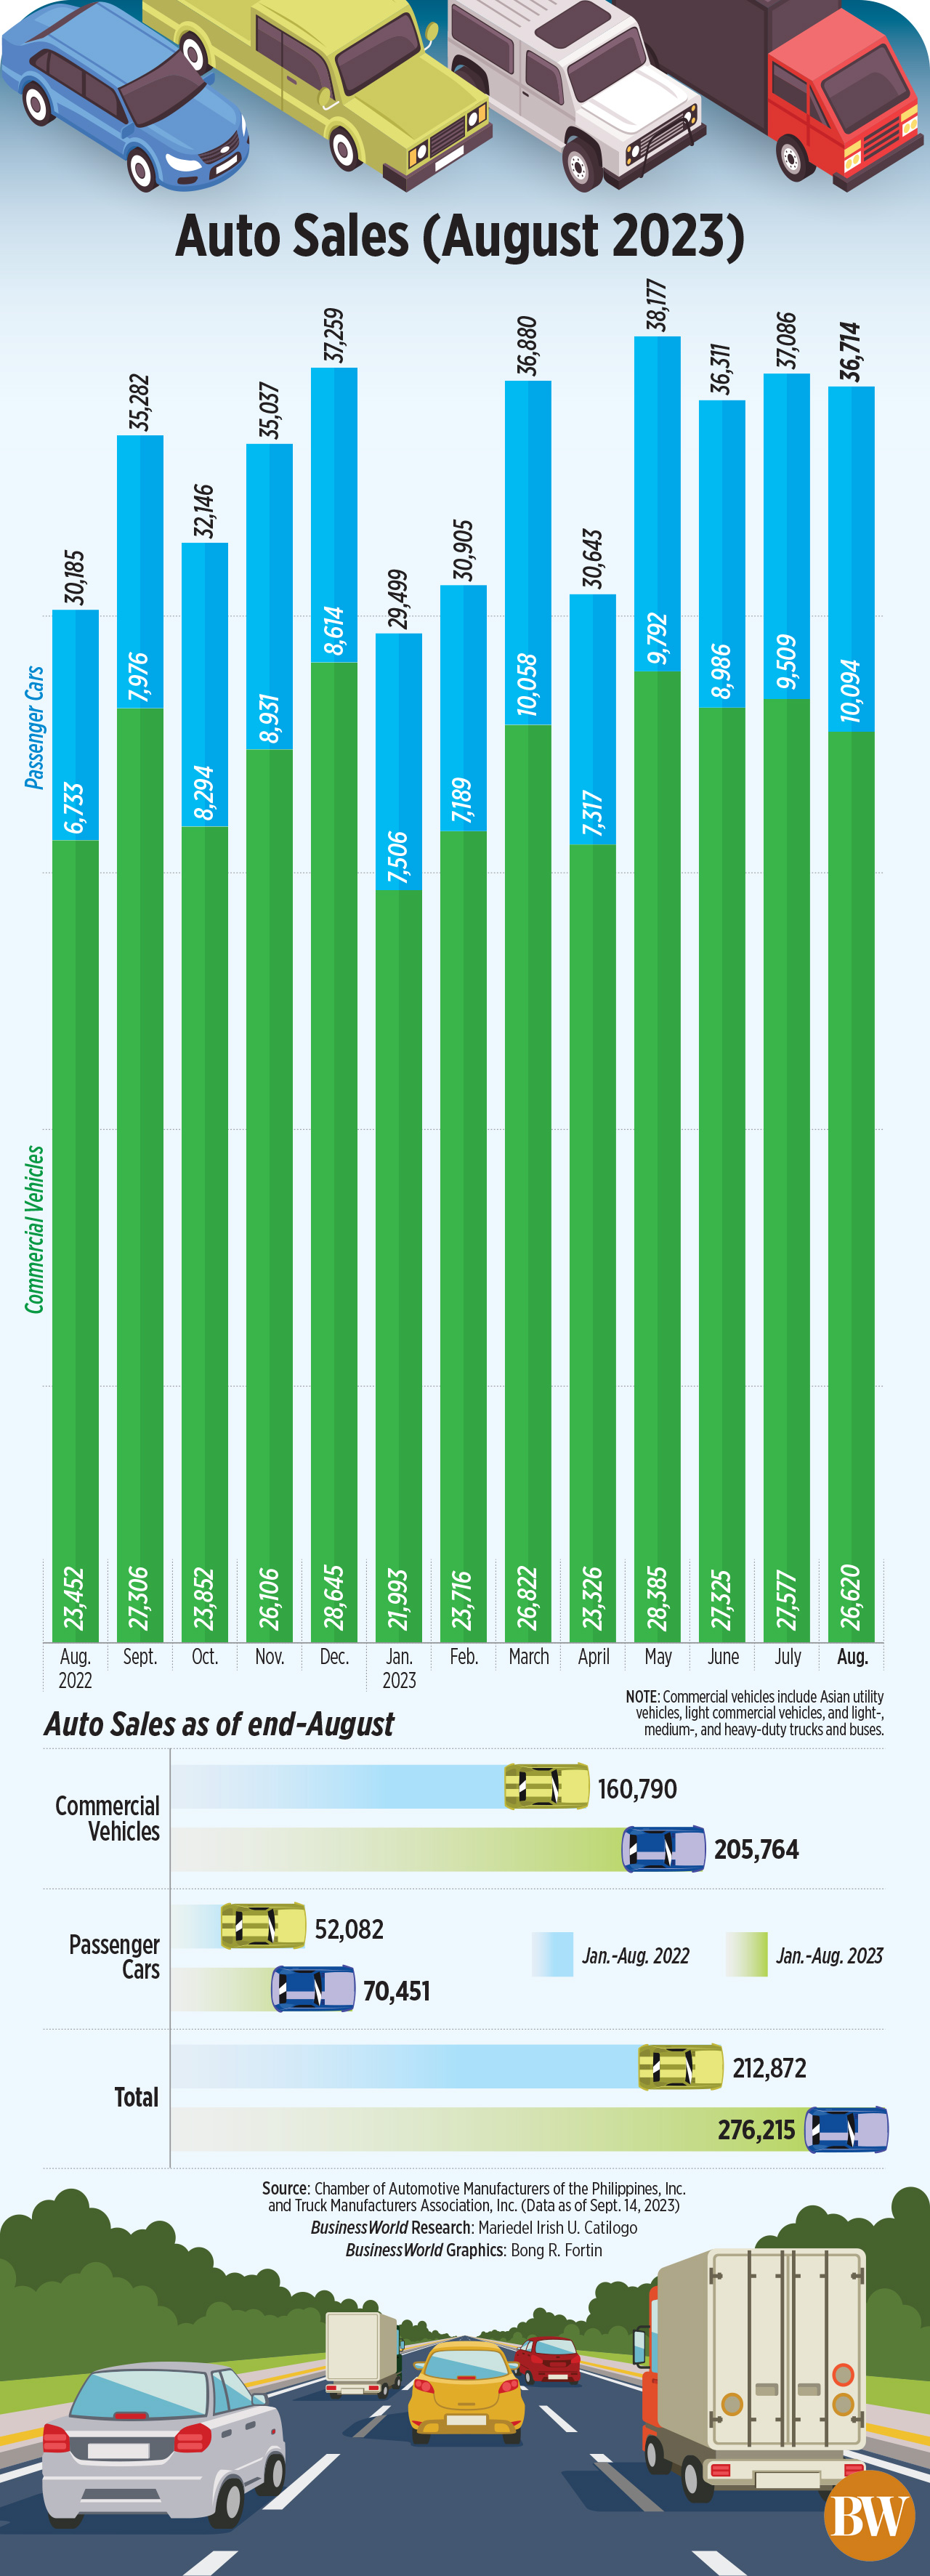 Auto Sales (August 2023)